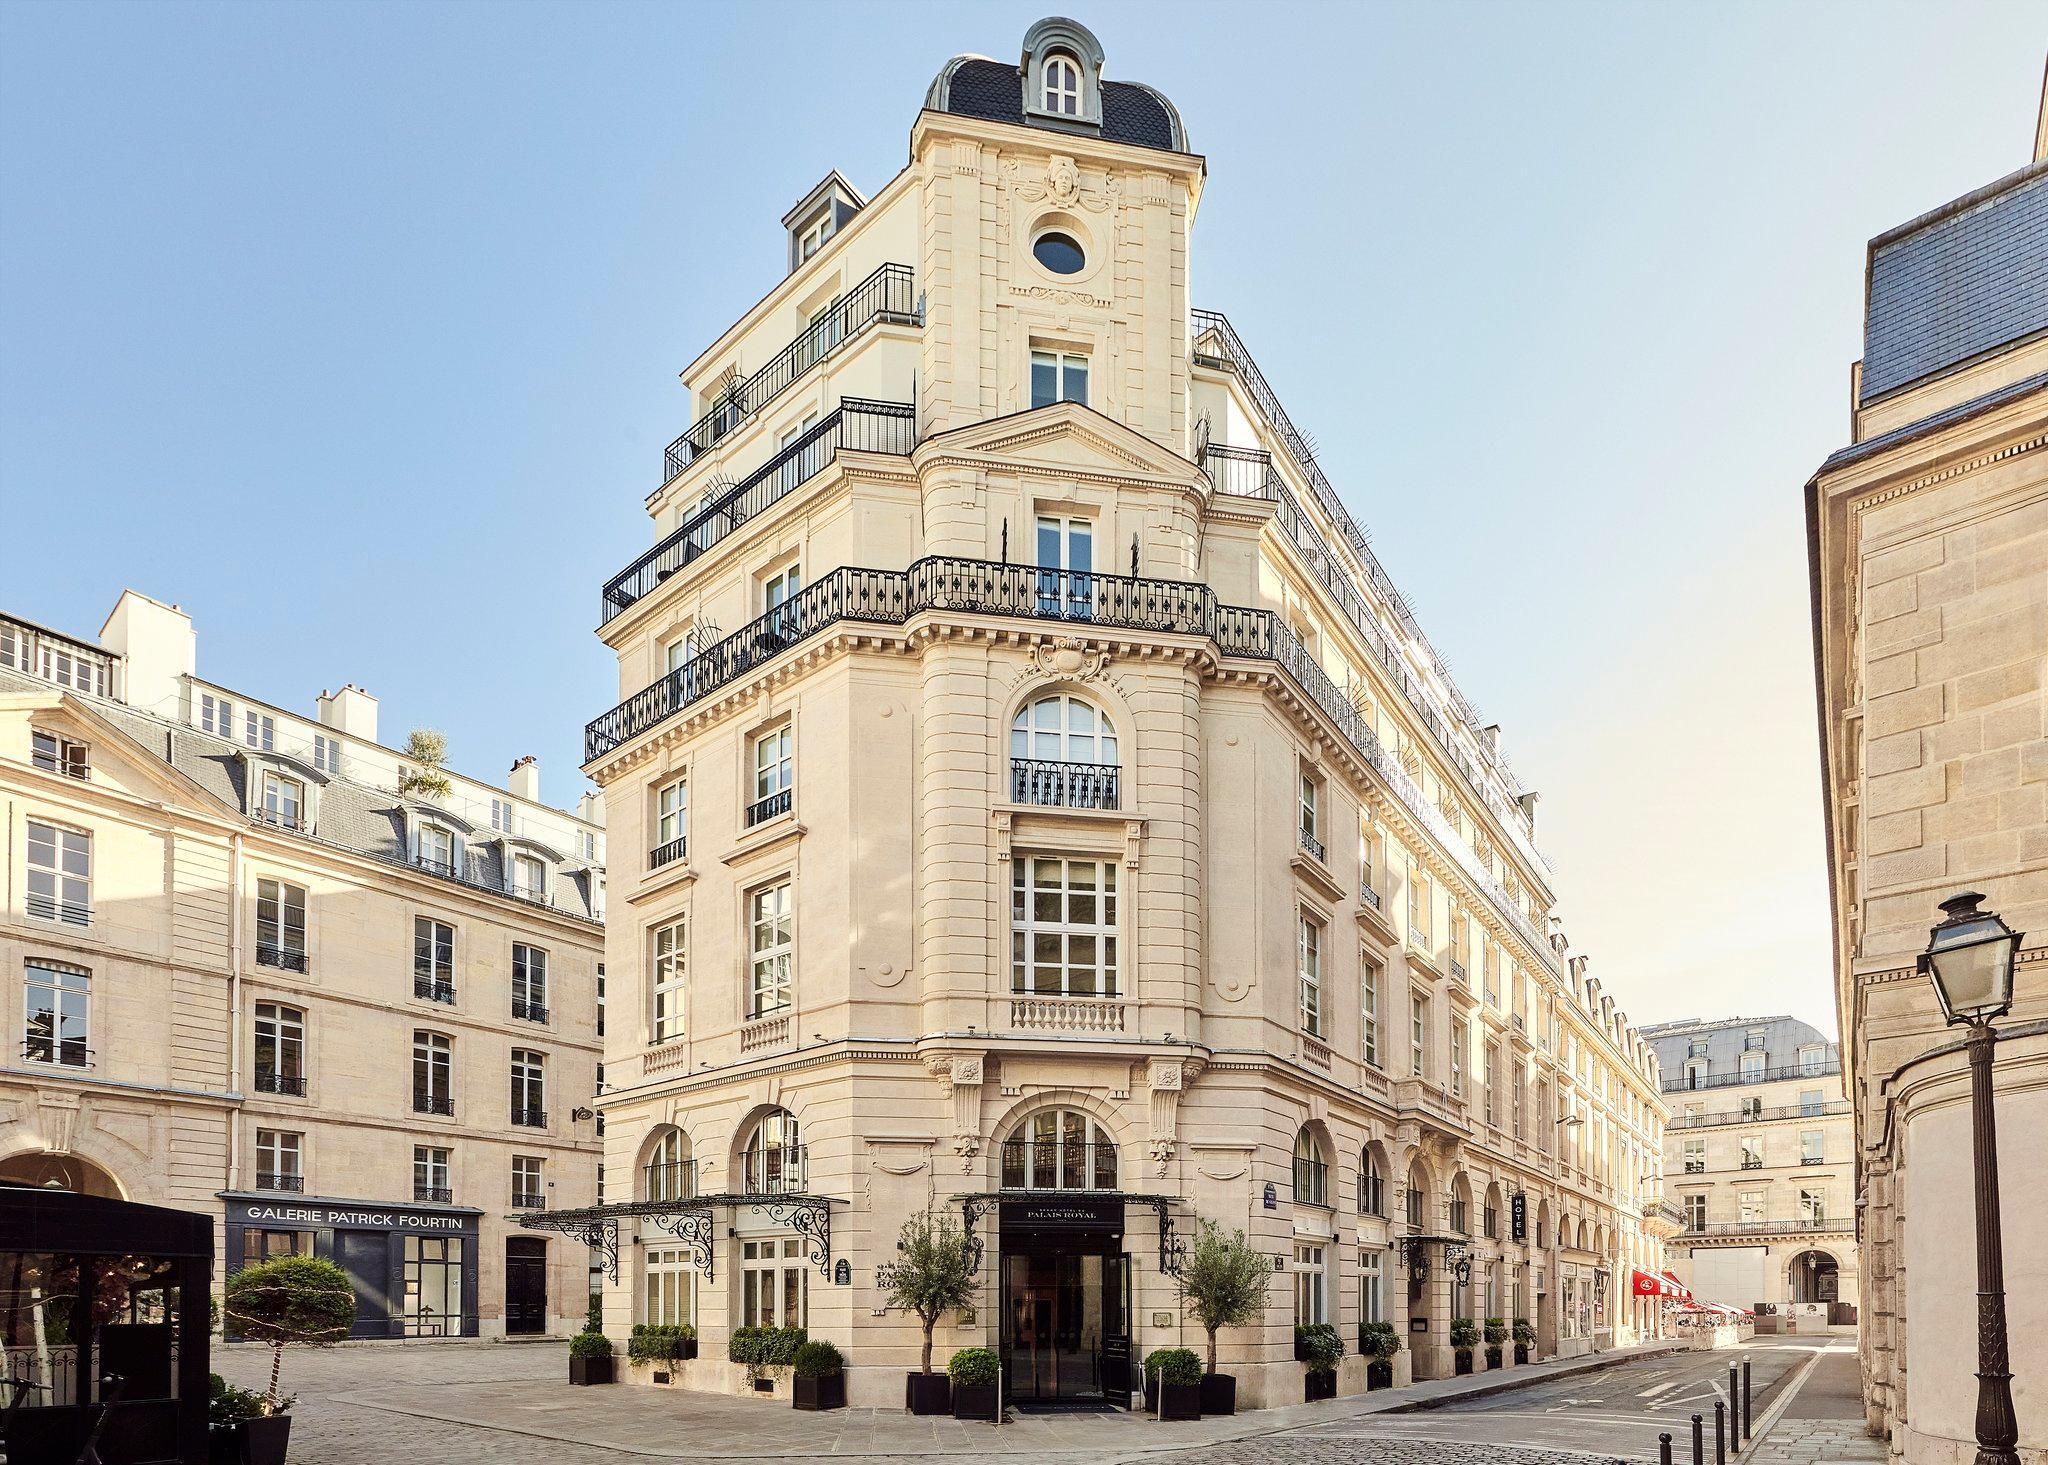 Grand Hotel du Palais Royal in Paris, FR